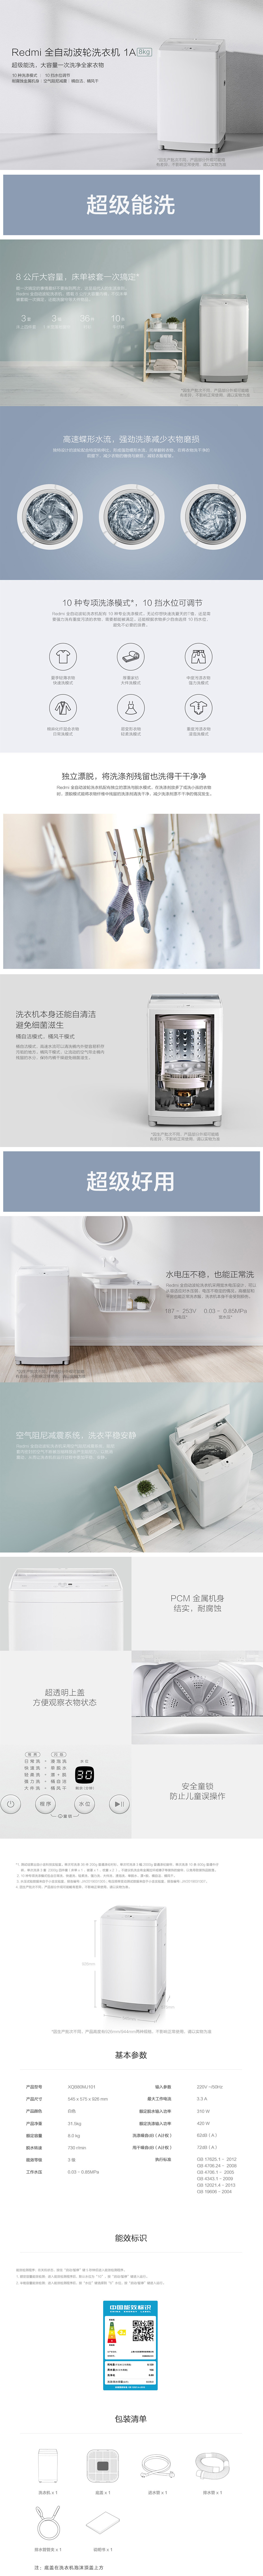 Redmi全自动波轮洗衣机1A 8kg立即购买-小米商城.jpg